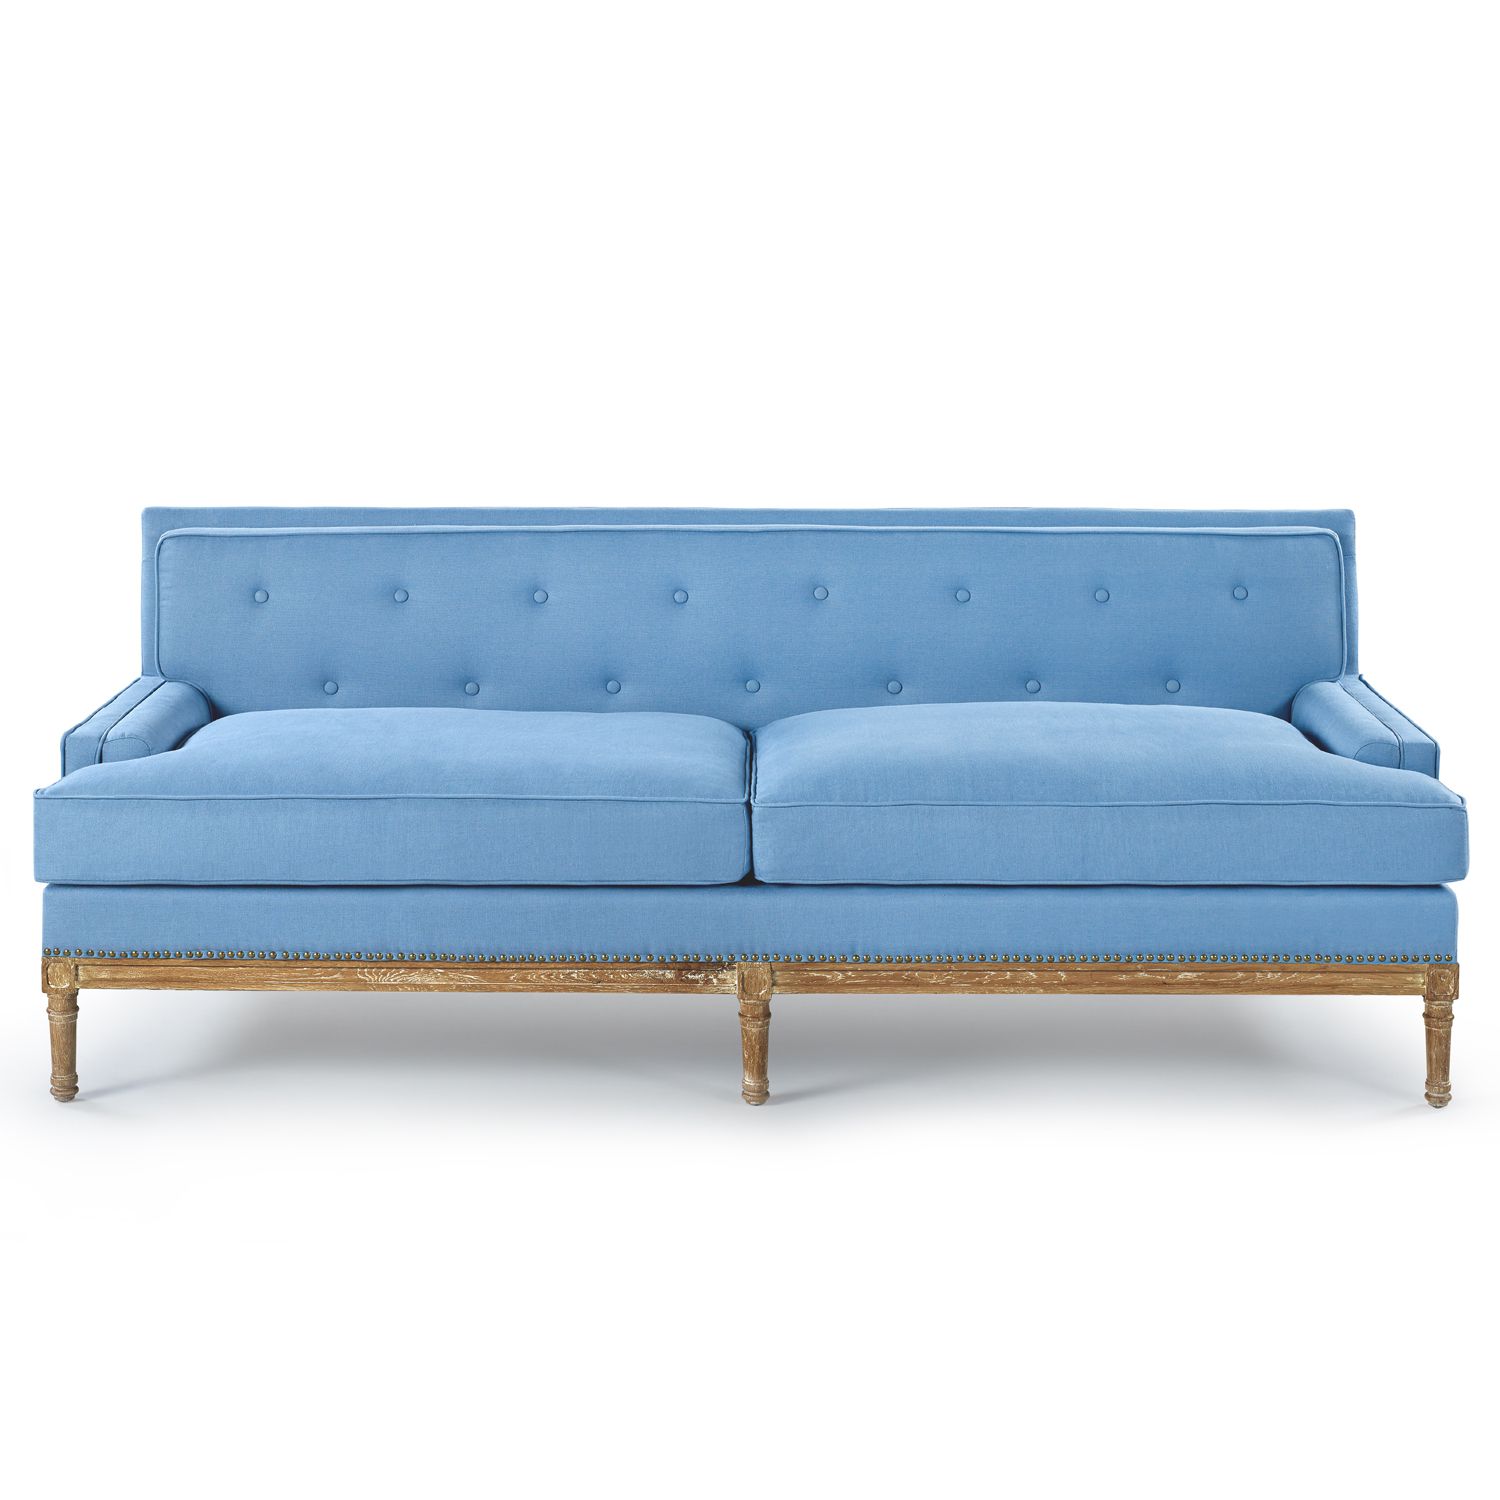 blue sofa 20 best blue sofas - stylish blue couch ideas EJPFDWX